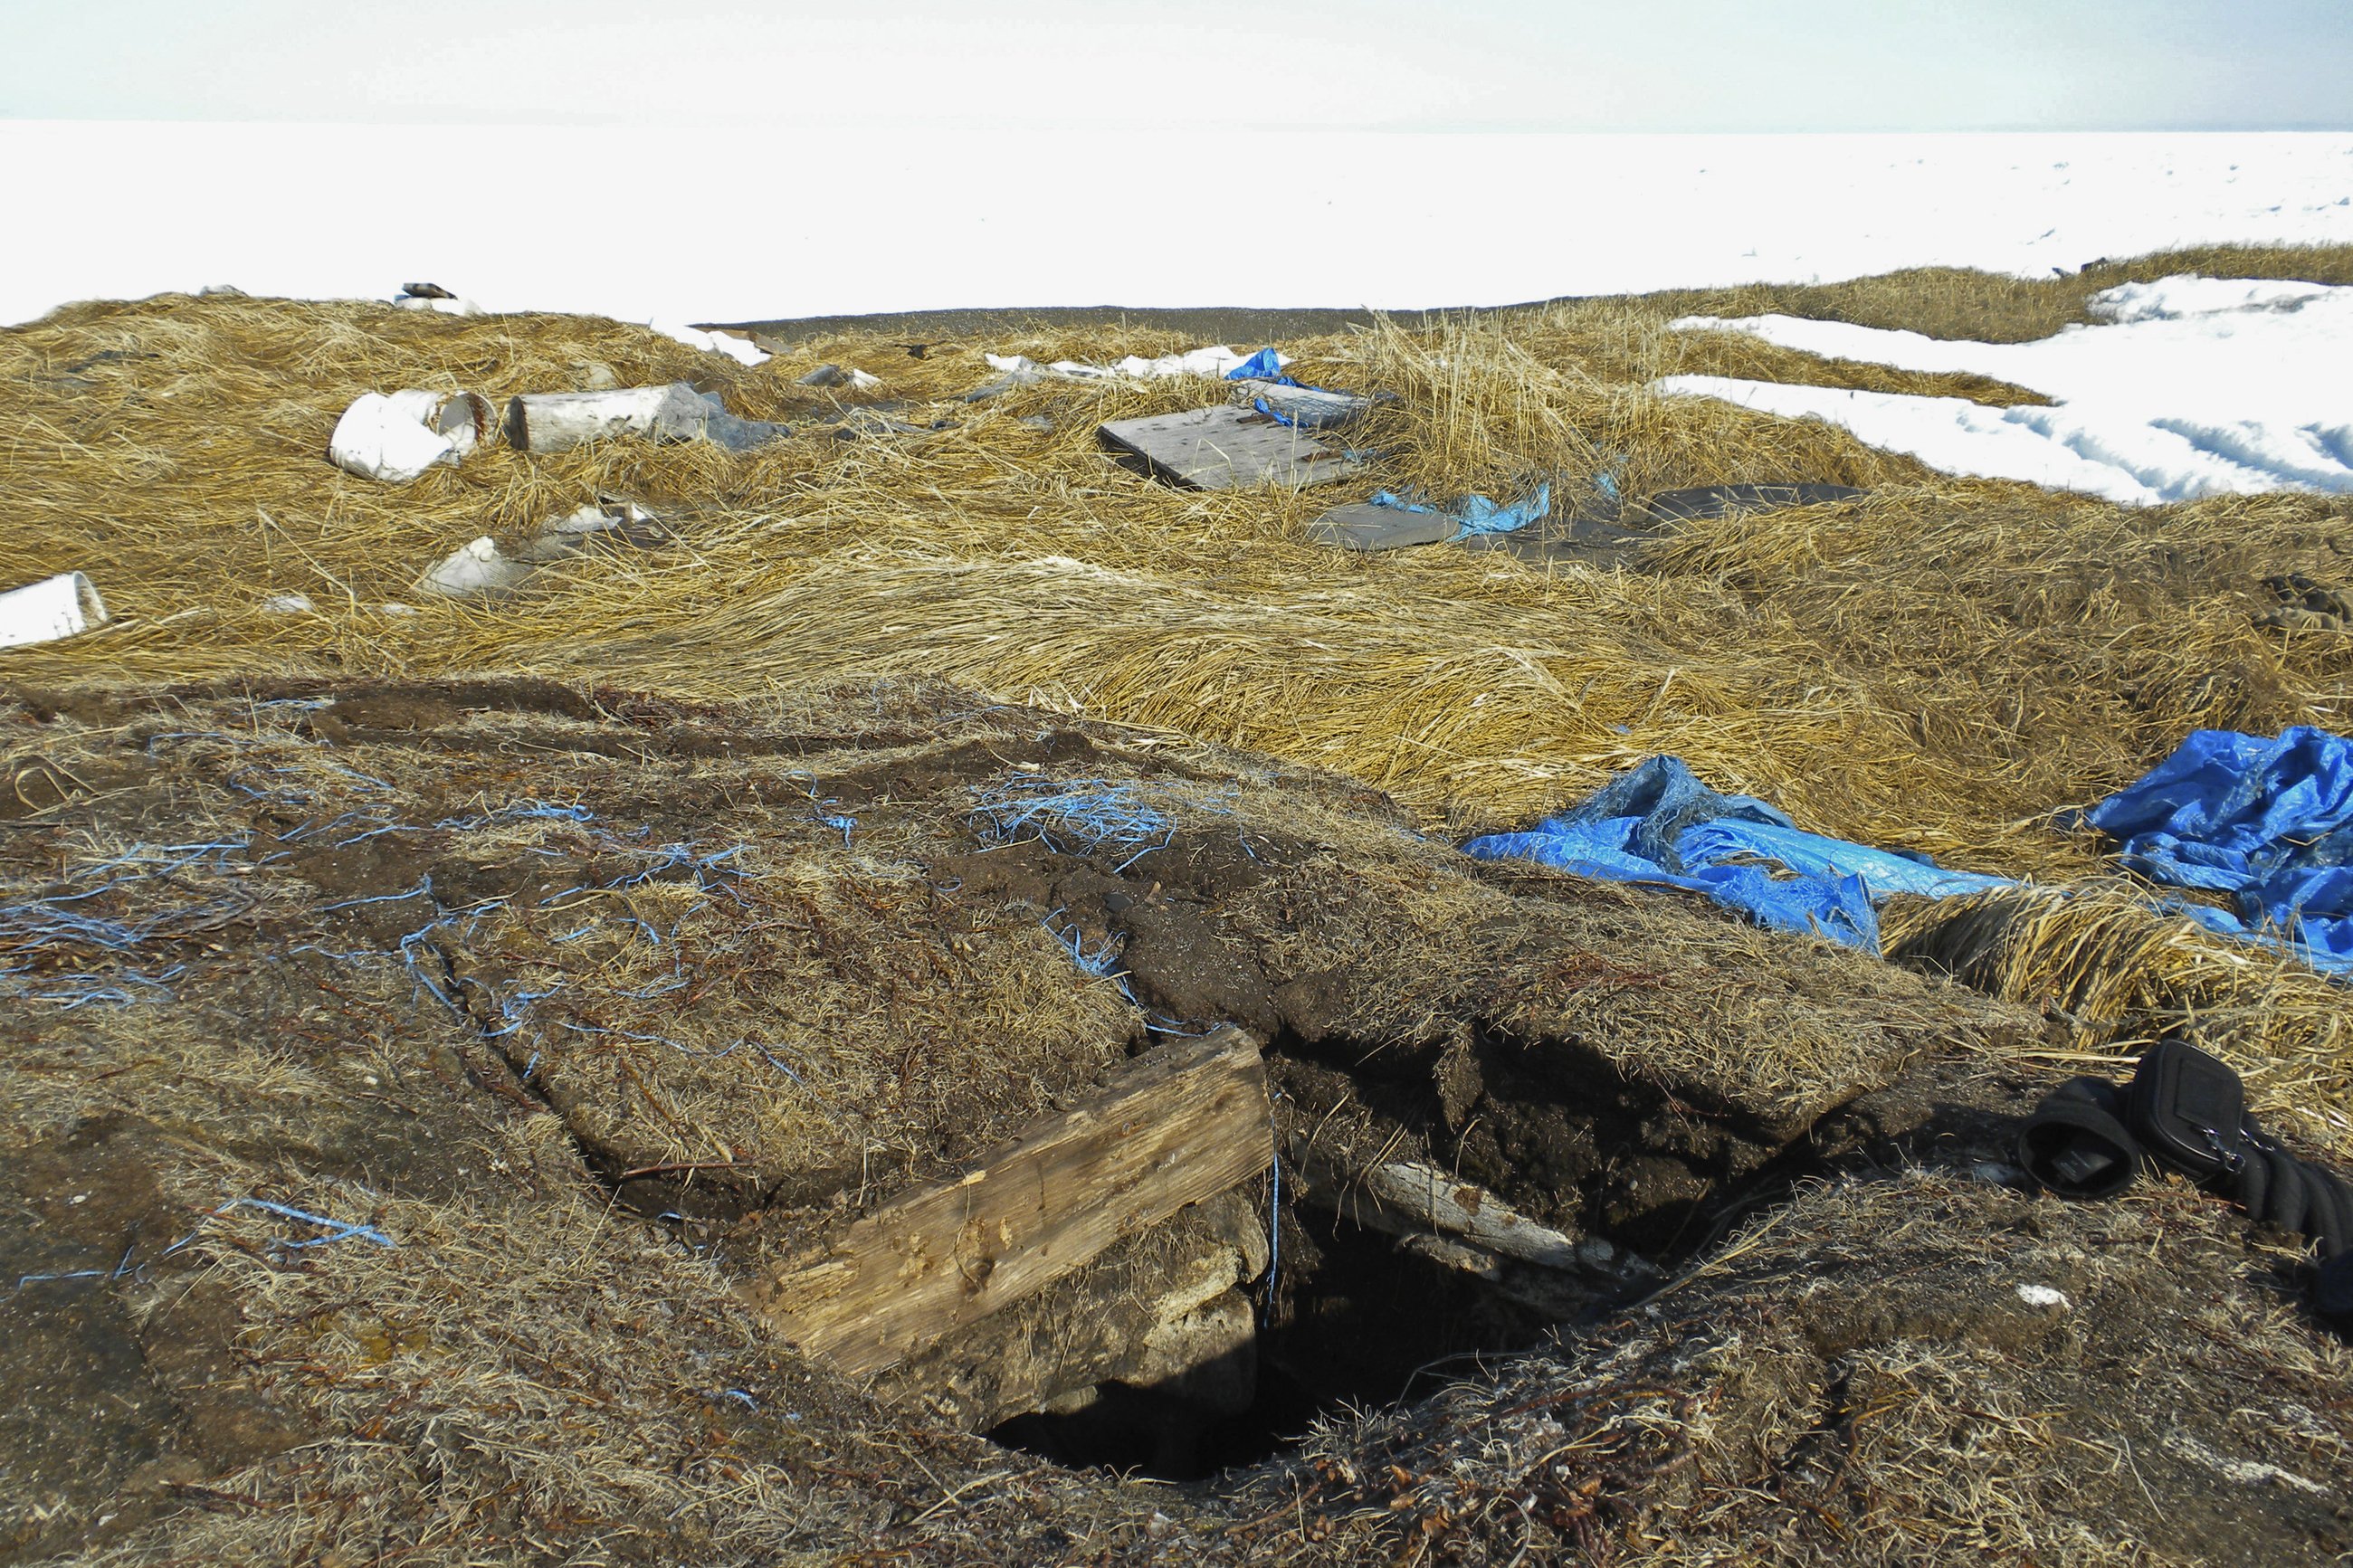 Alaska Native ice cellars failing amid environmental changes - The Associated Press